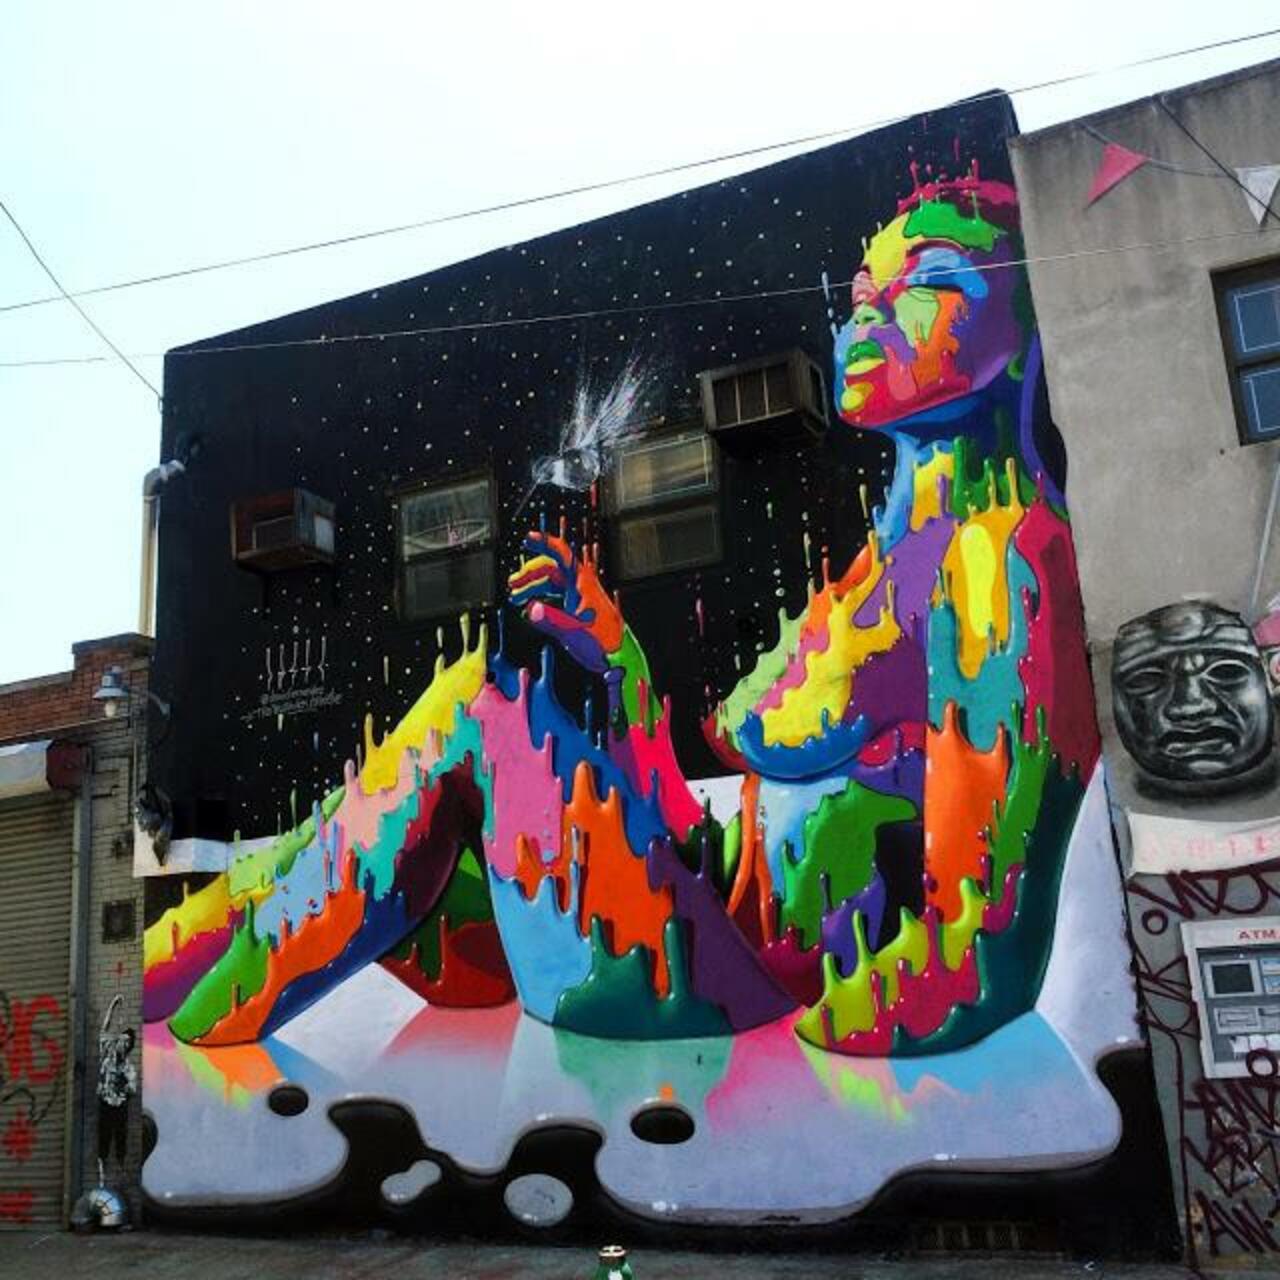 "Check out this insane #artwork by Dasic Fernandez. Seen in Bushwick, NYC: http://bit.ly/streetartlovers #streetart https://t.co/Yd0mthB2Sf"